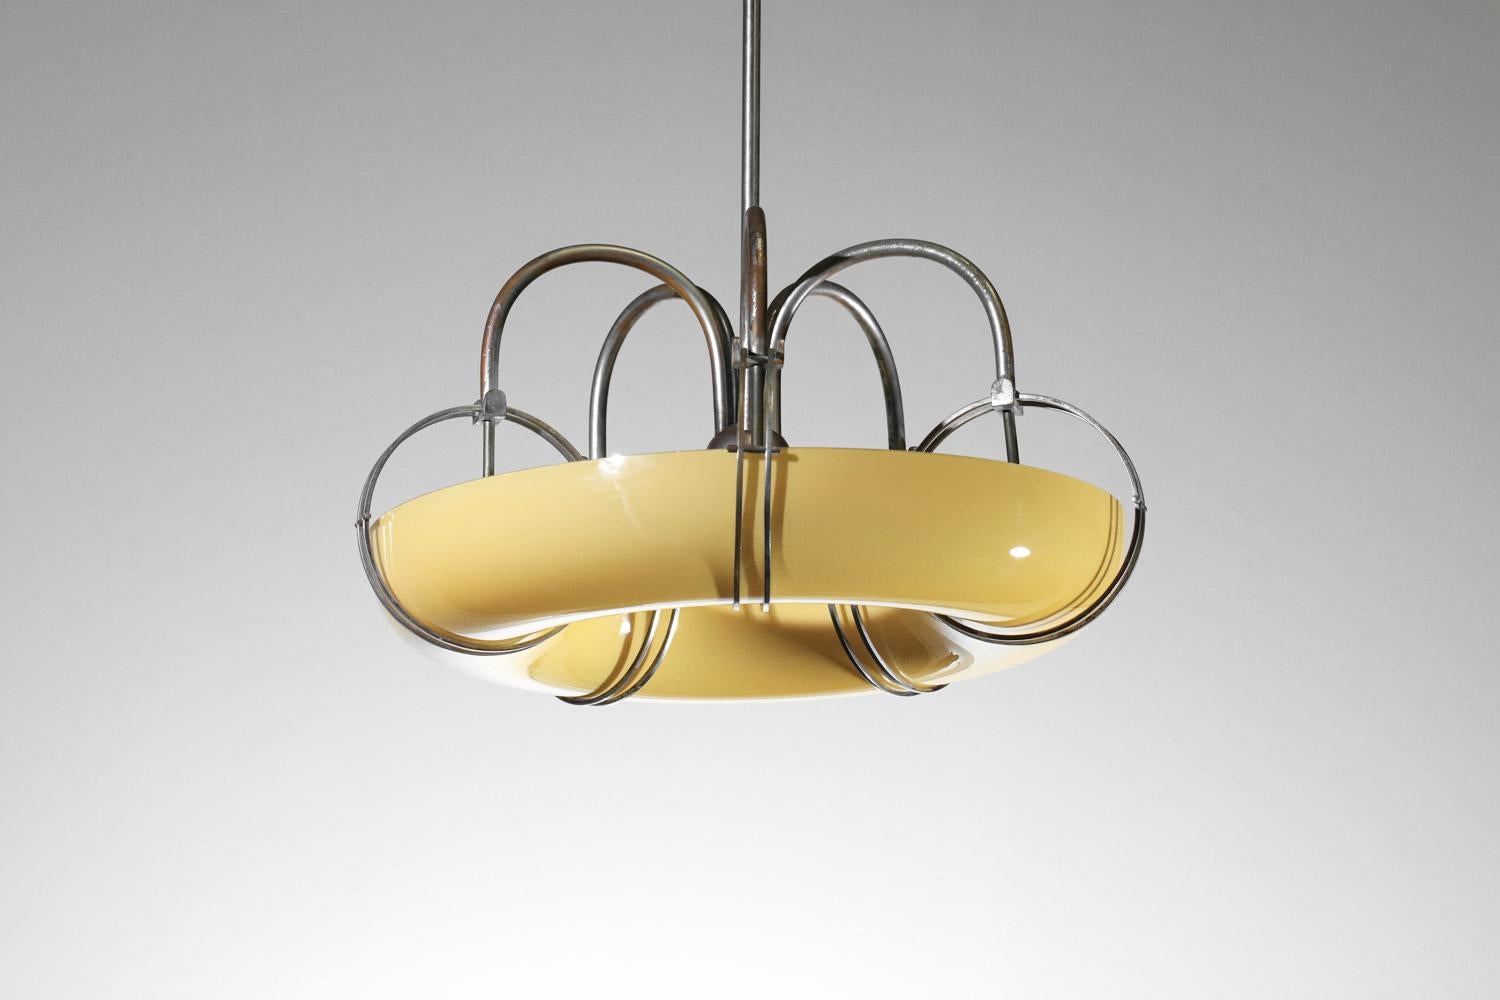 Mid-20th Century Italian modernist art deco glass ring pendant chandelier 1940's original 